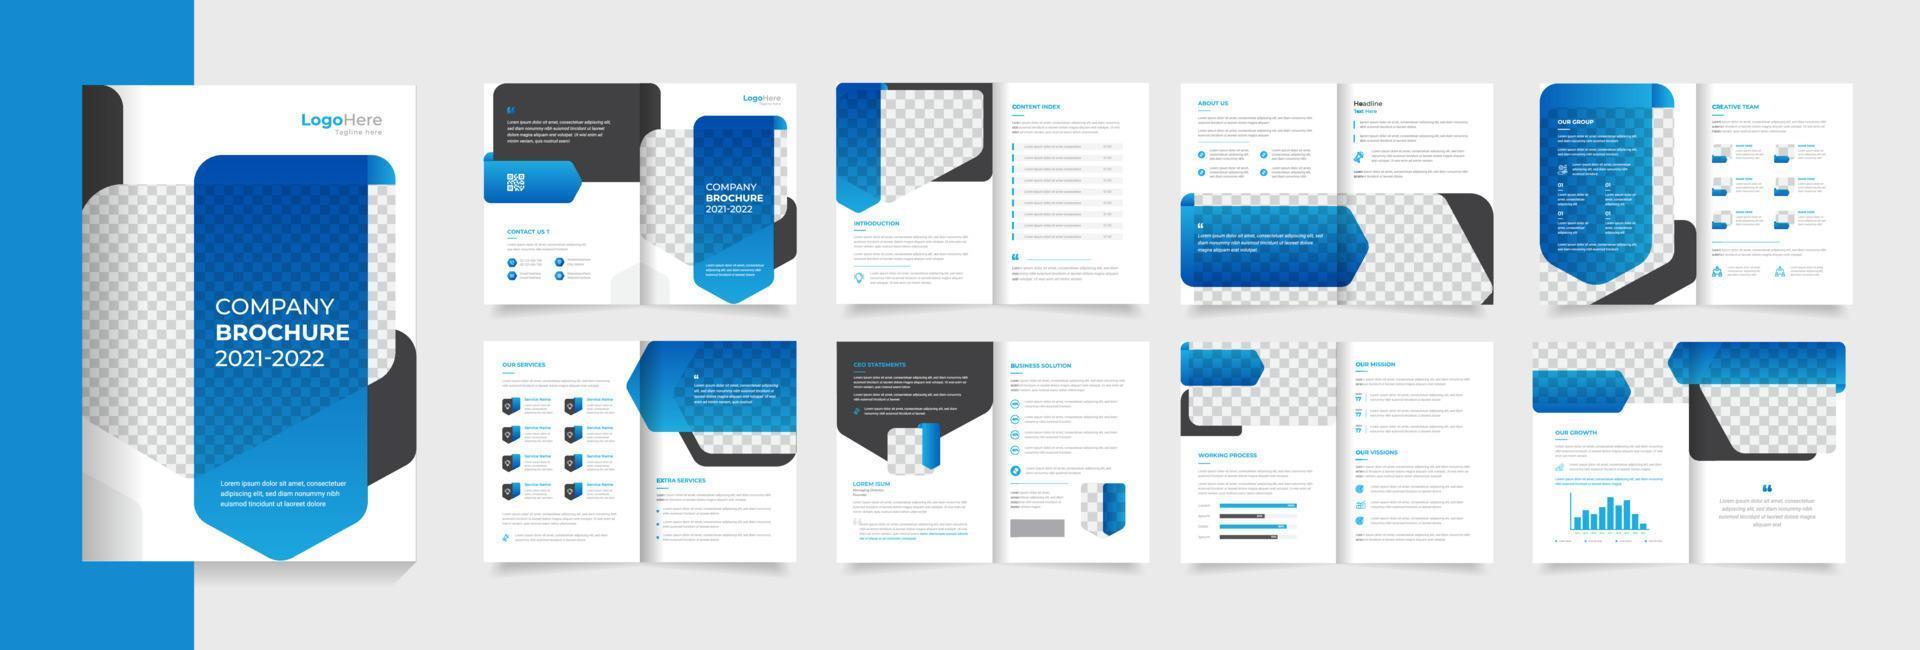 corporate modern brochure template design with modern layout premium vector